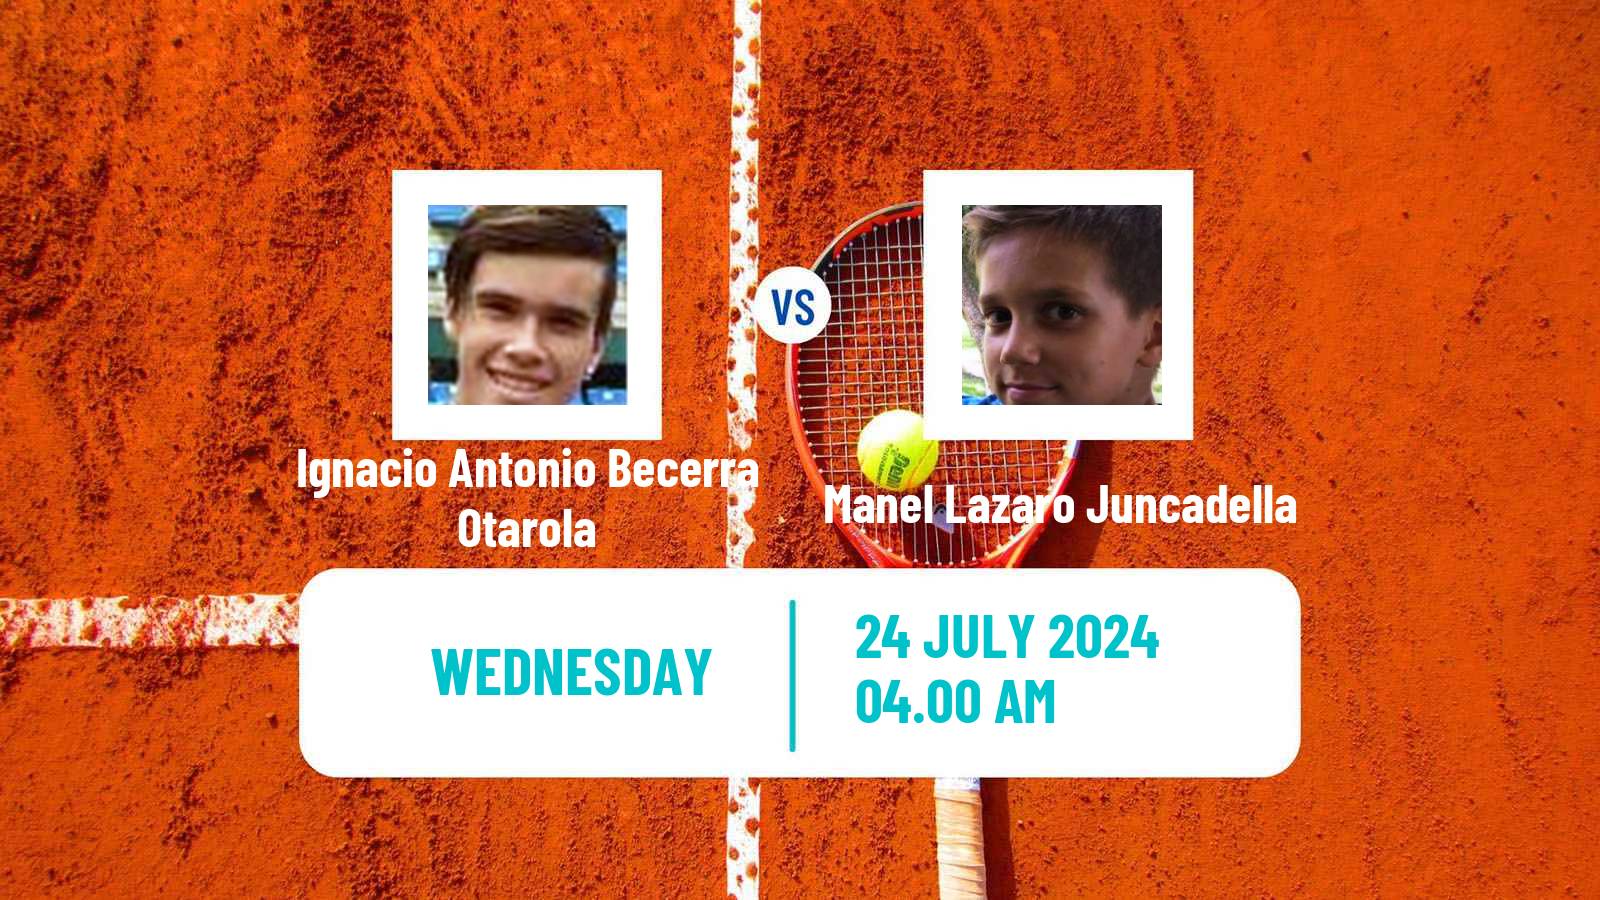 Tennis ITF M25 Denia Men Ignacio Antonio Becerra Otarola - Manel Lazaro Juncadella